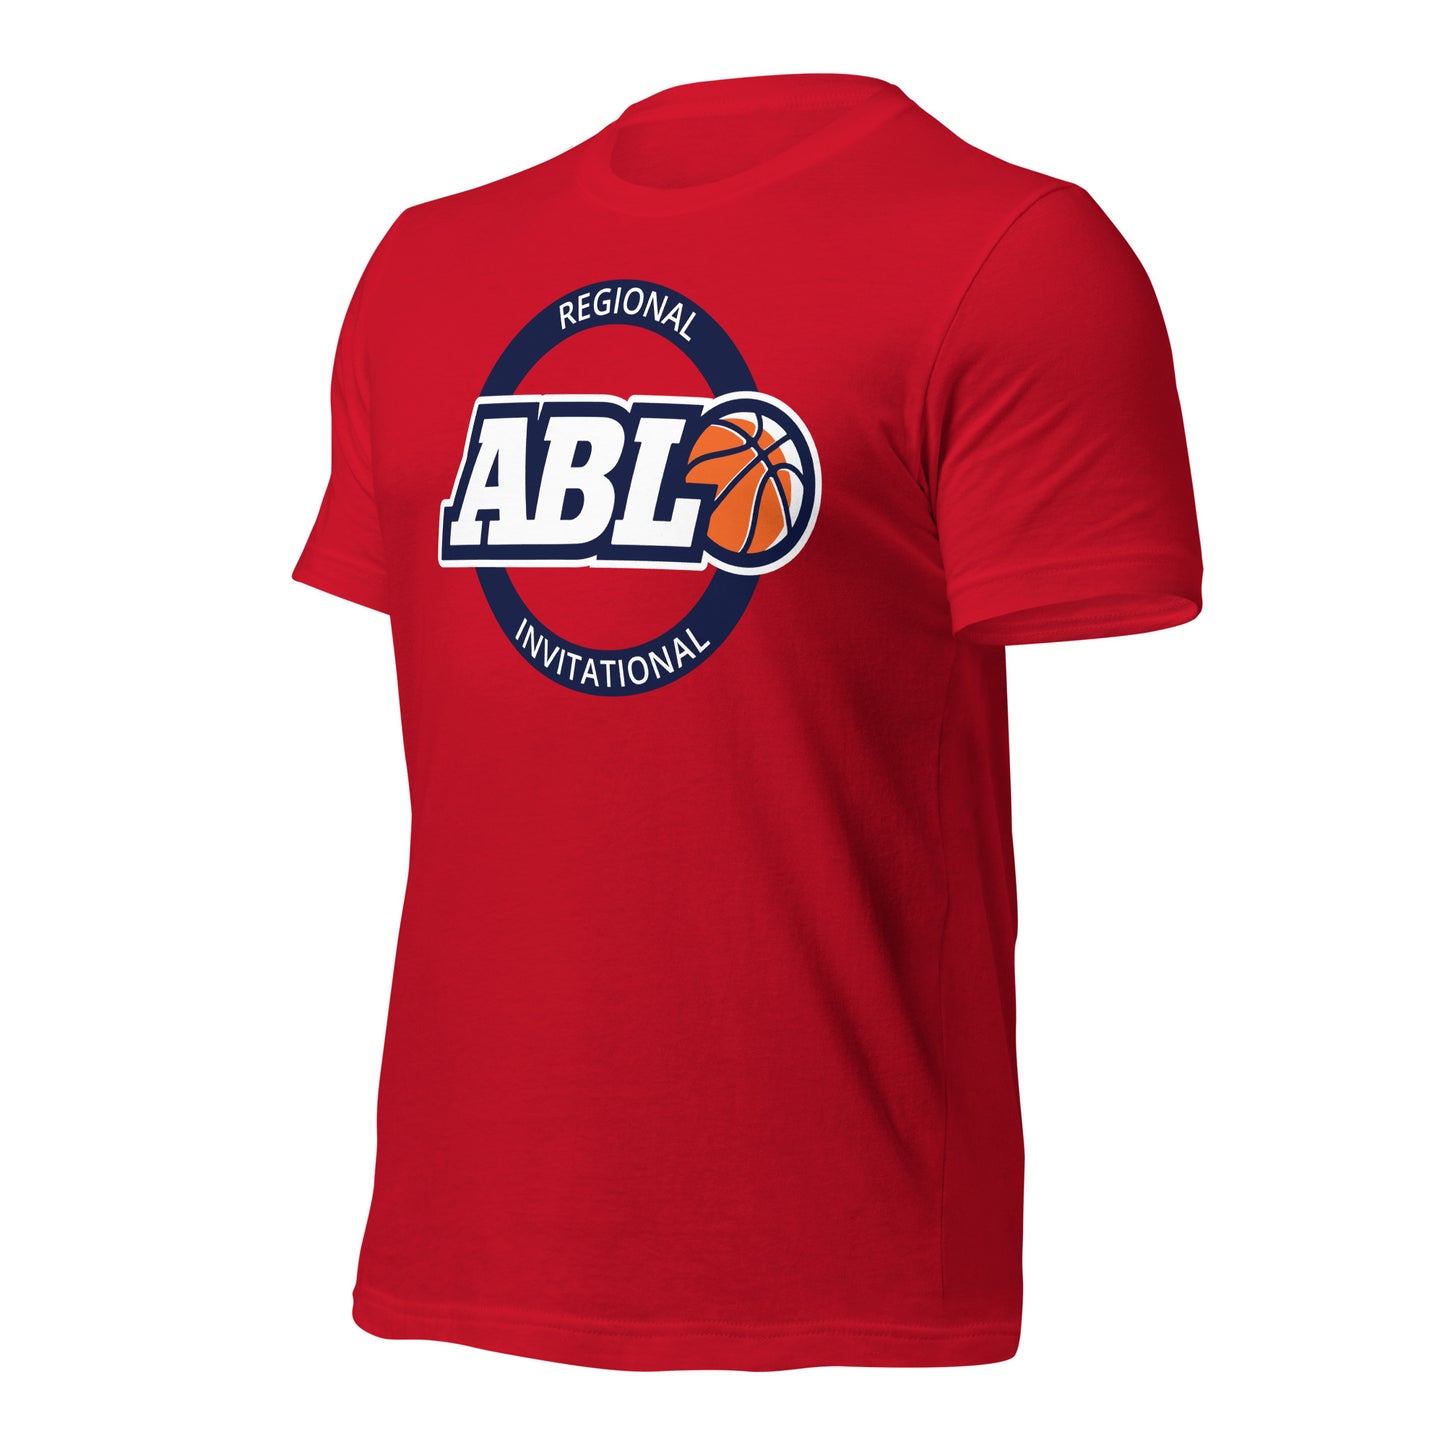 ABL Regional Tourney Unisex t-shirt